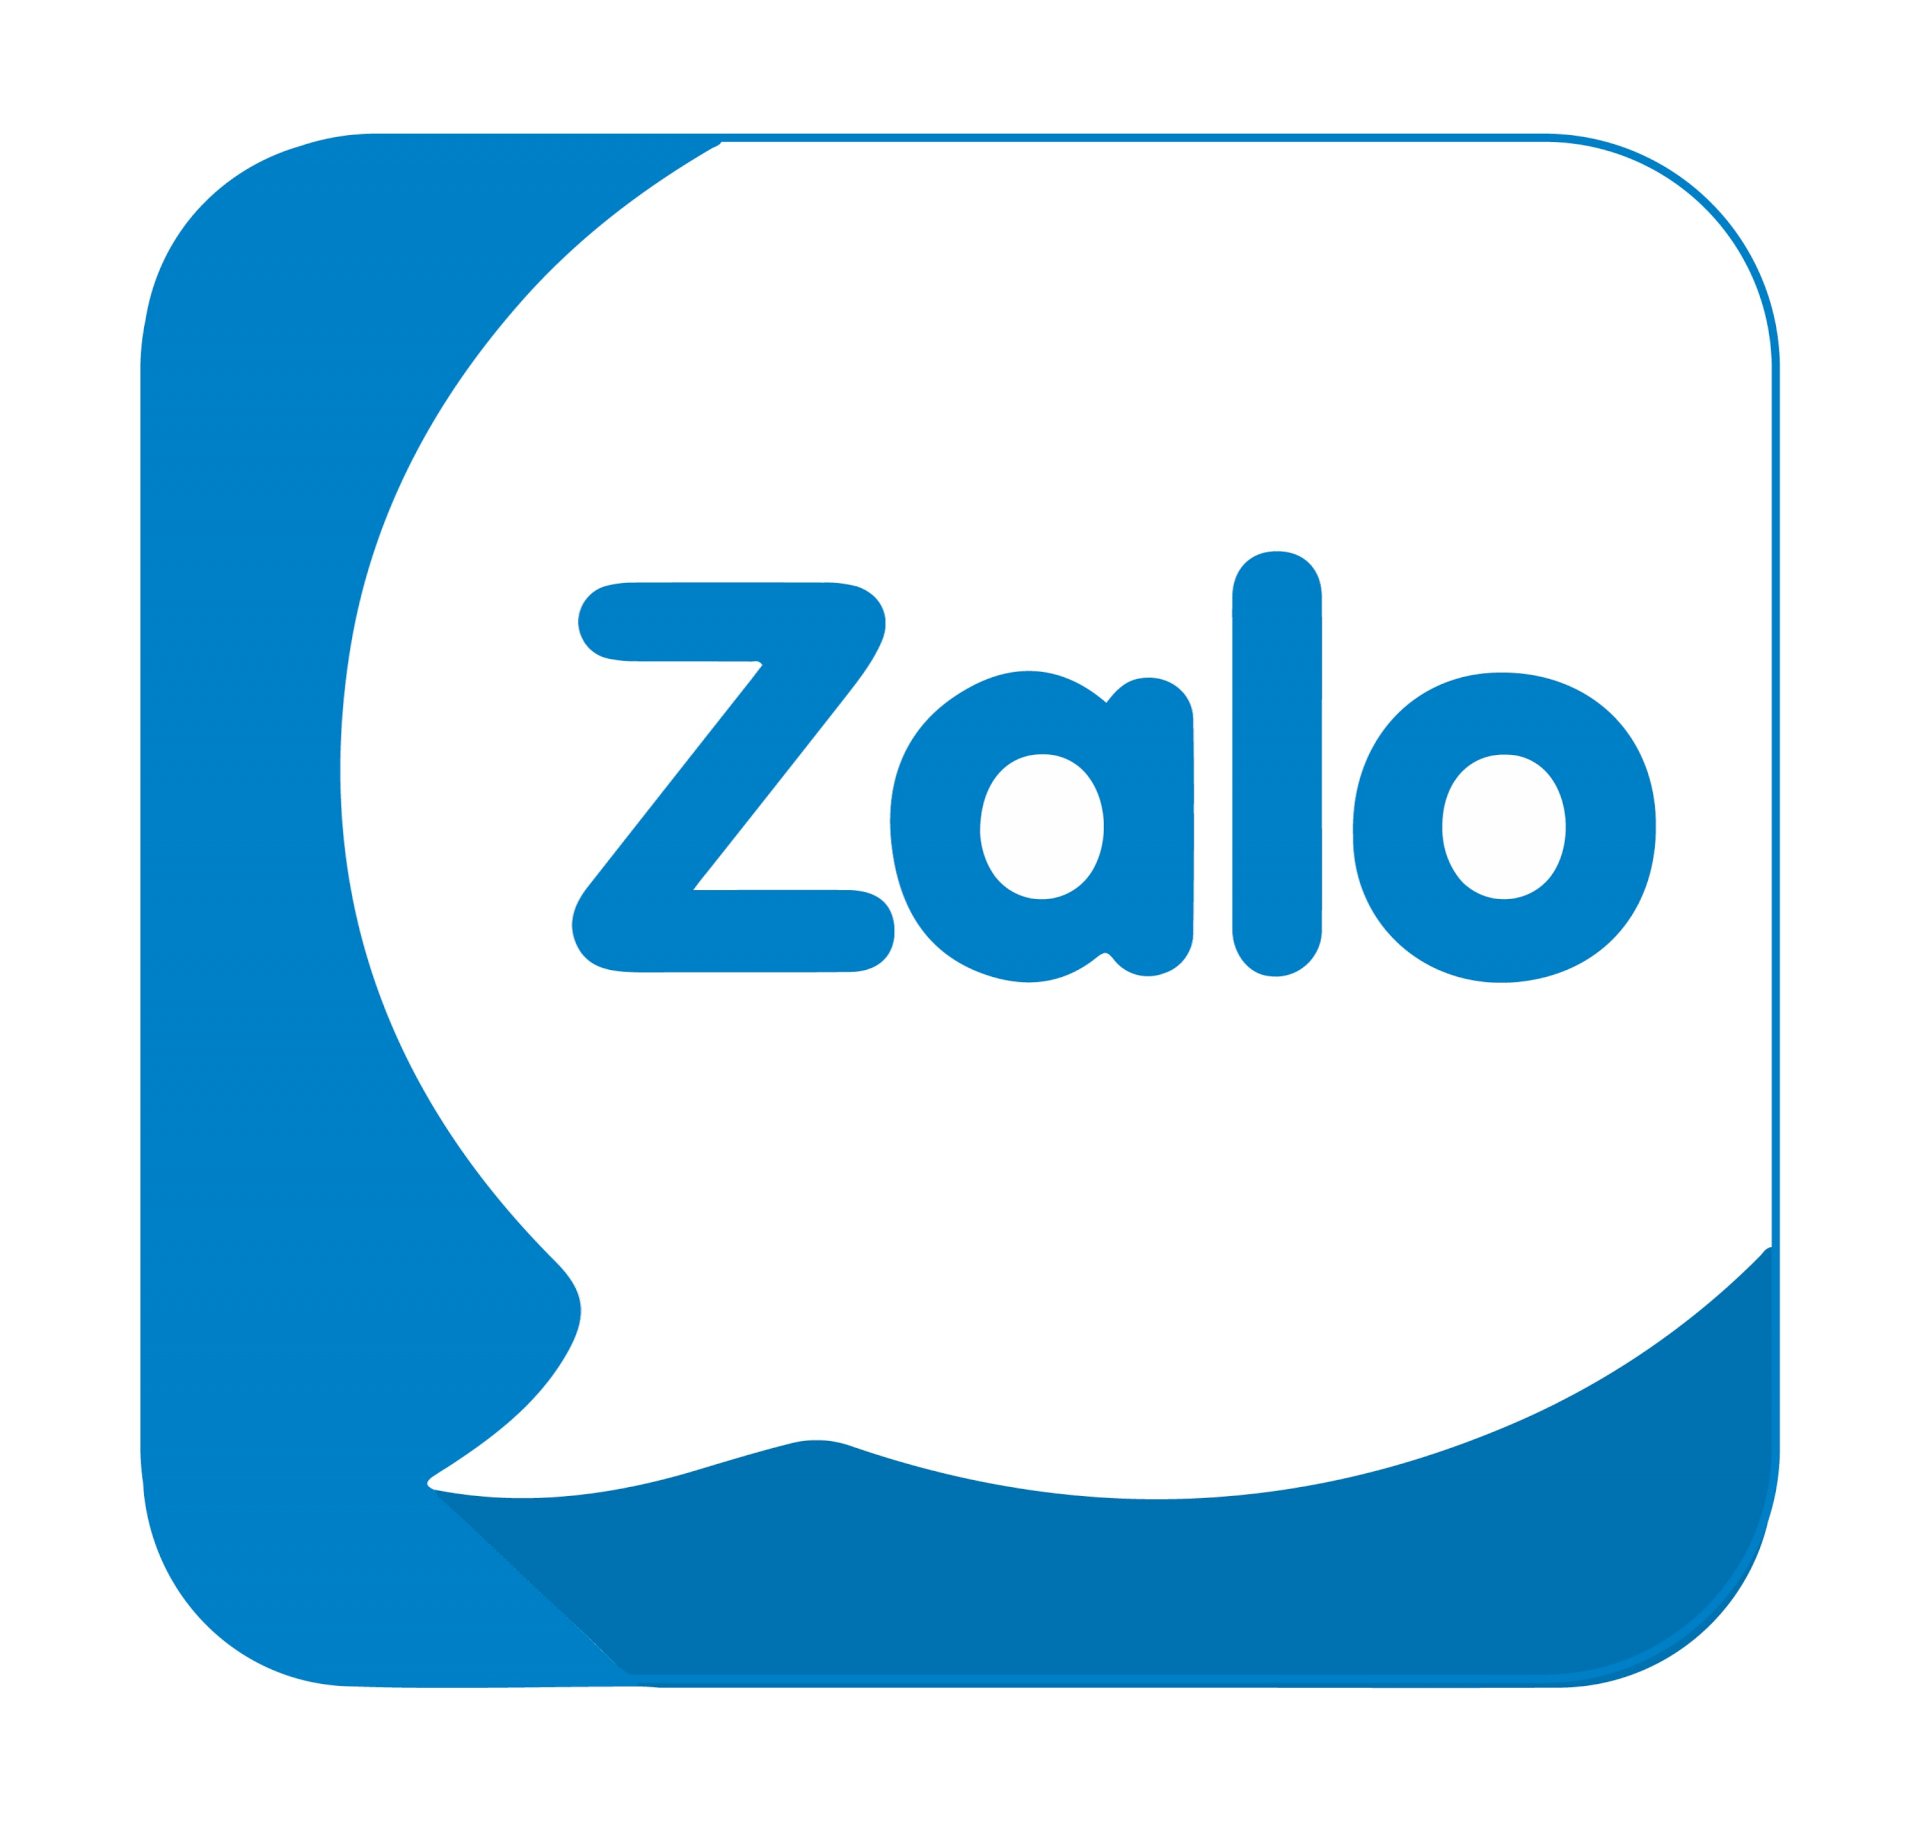 Tải Zalo logo vector file AI, CDR, EPS, SVG, PSD, PNG, PDF miễn phí